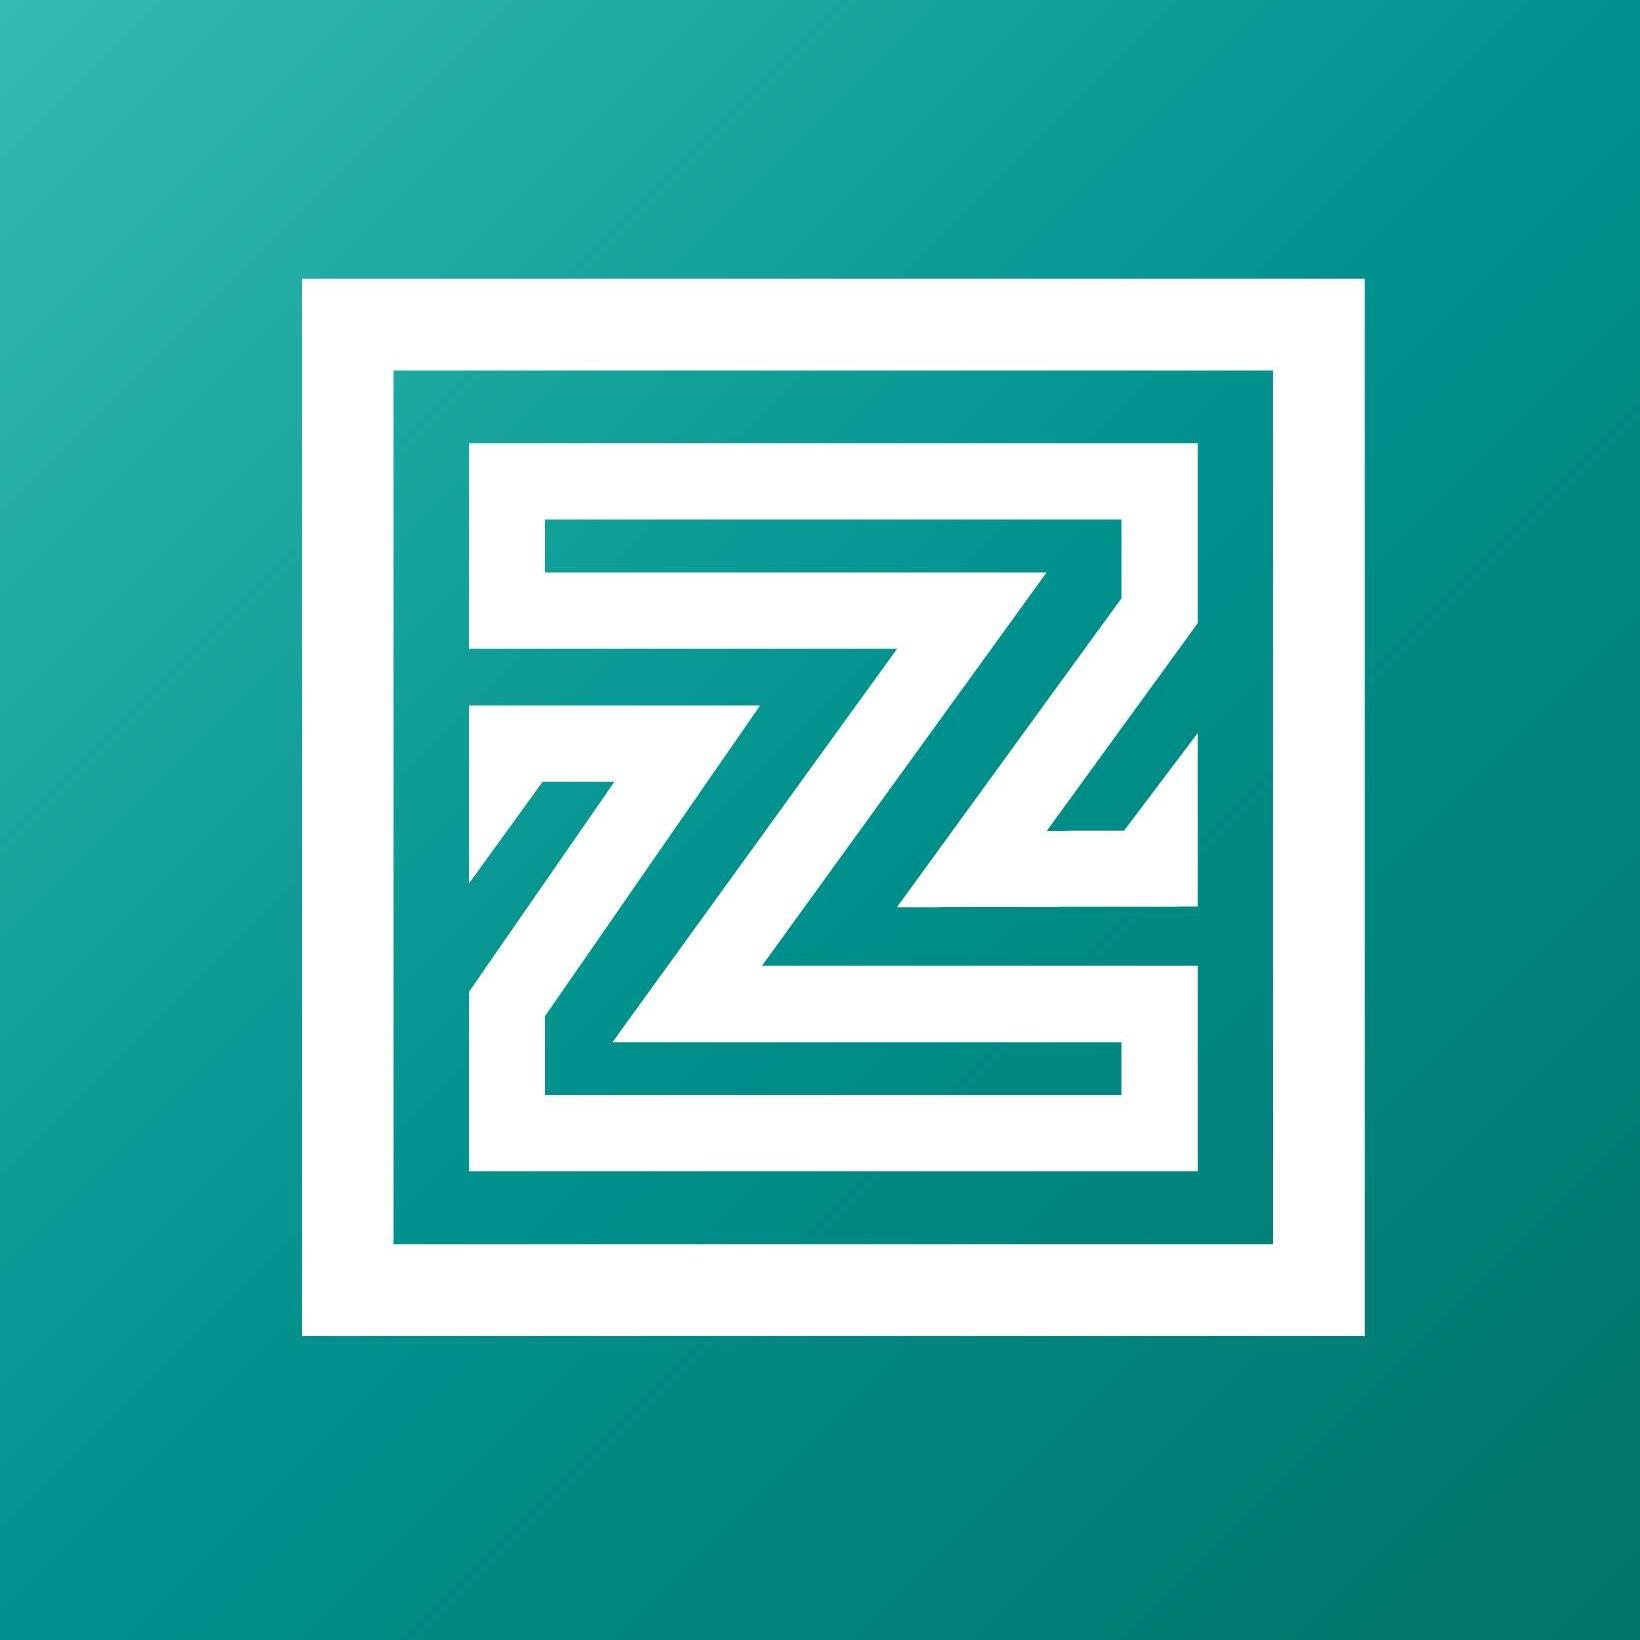 Company logo of Zhou Nutrition